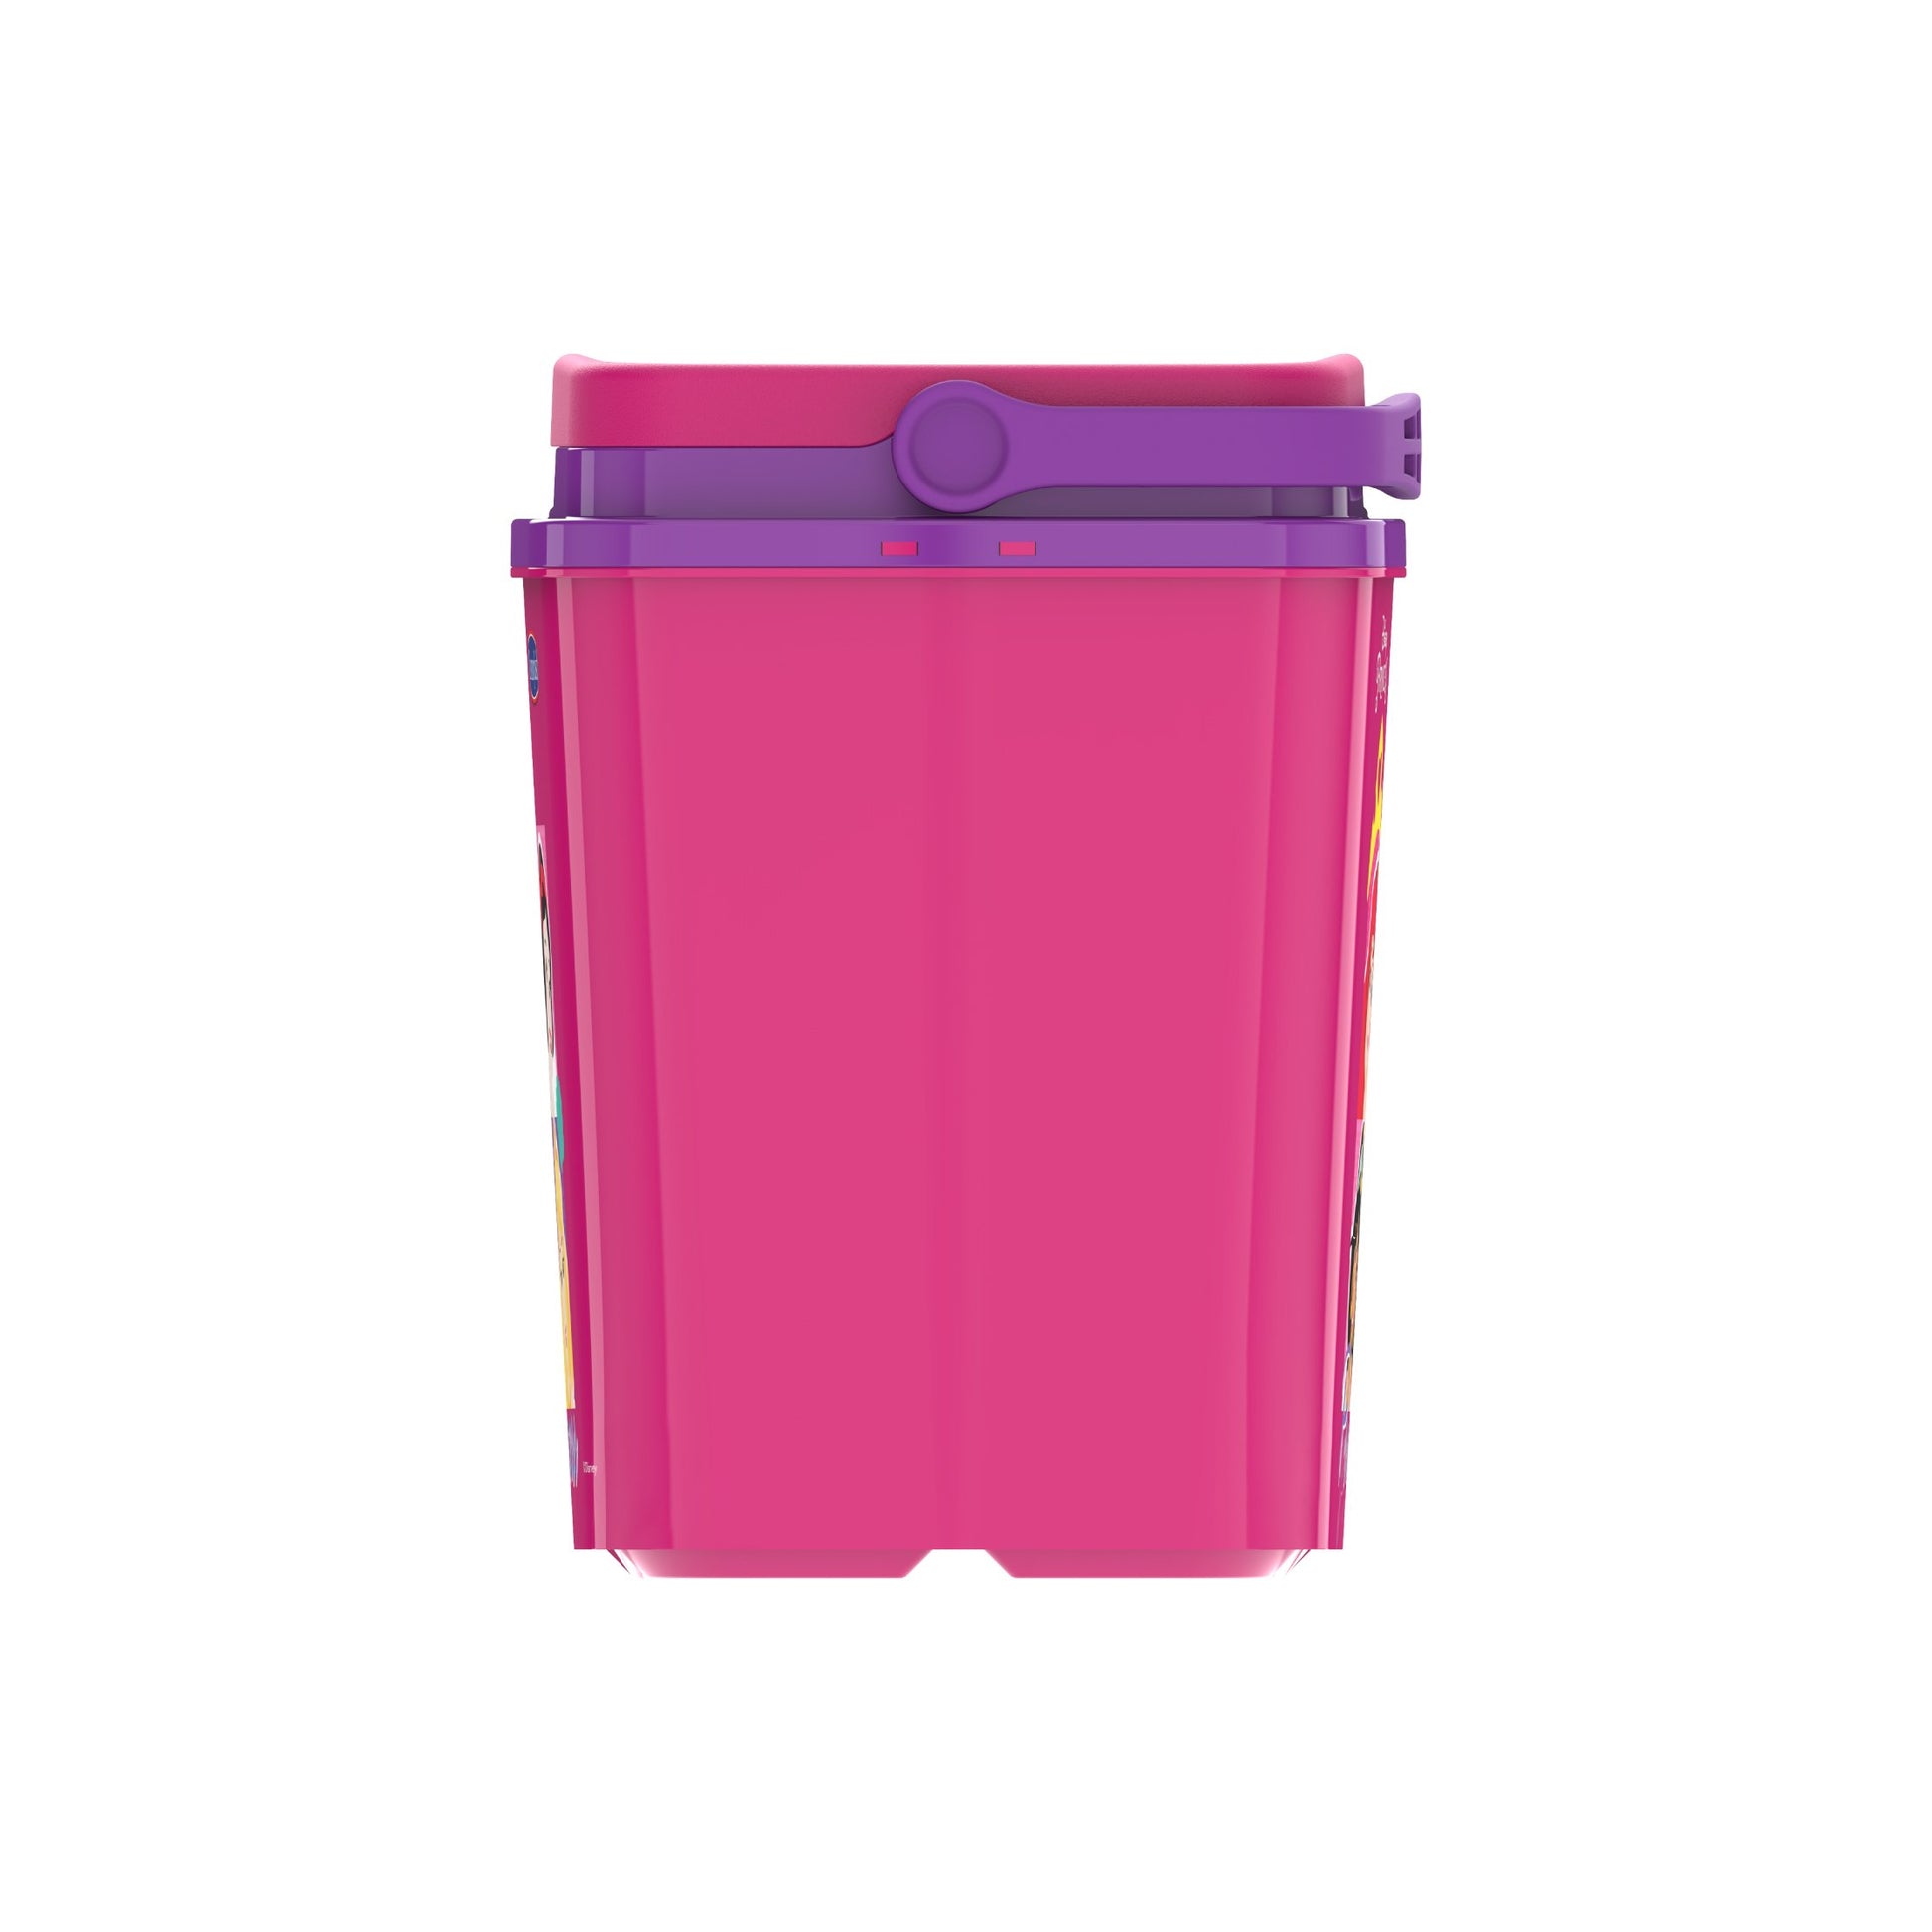 Cosmoplast Disney Princess ChillBox Lunch Box Cooler Icebox 4 Liters 